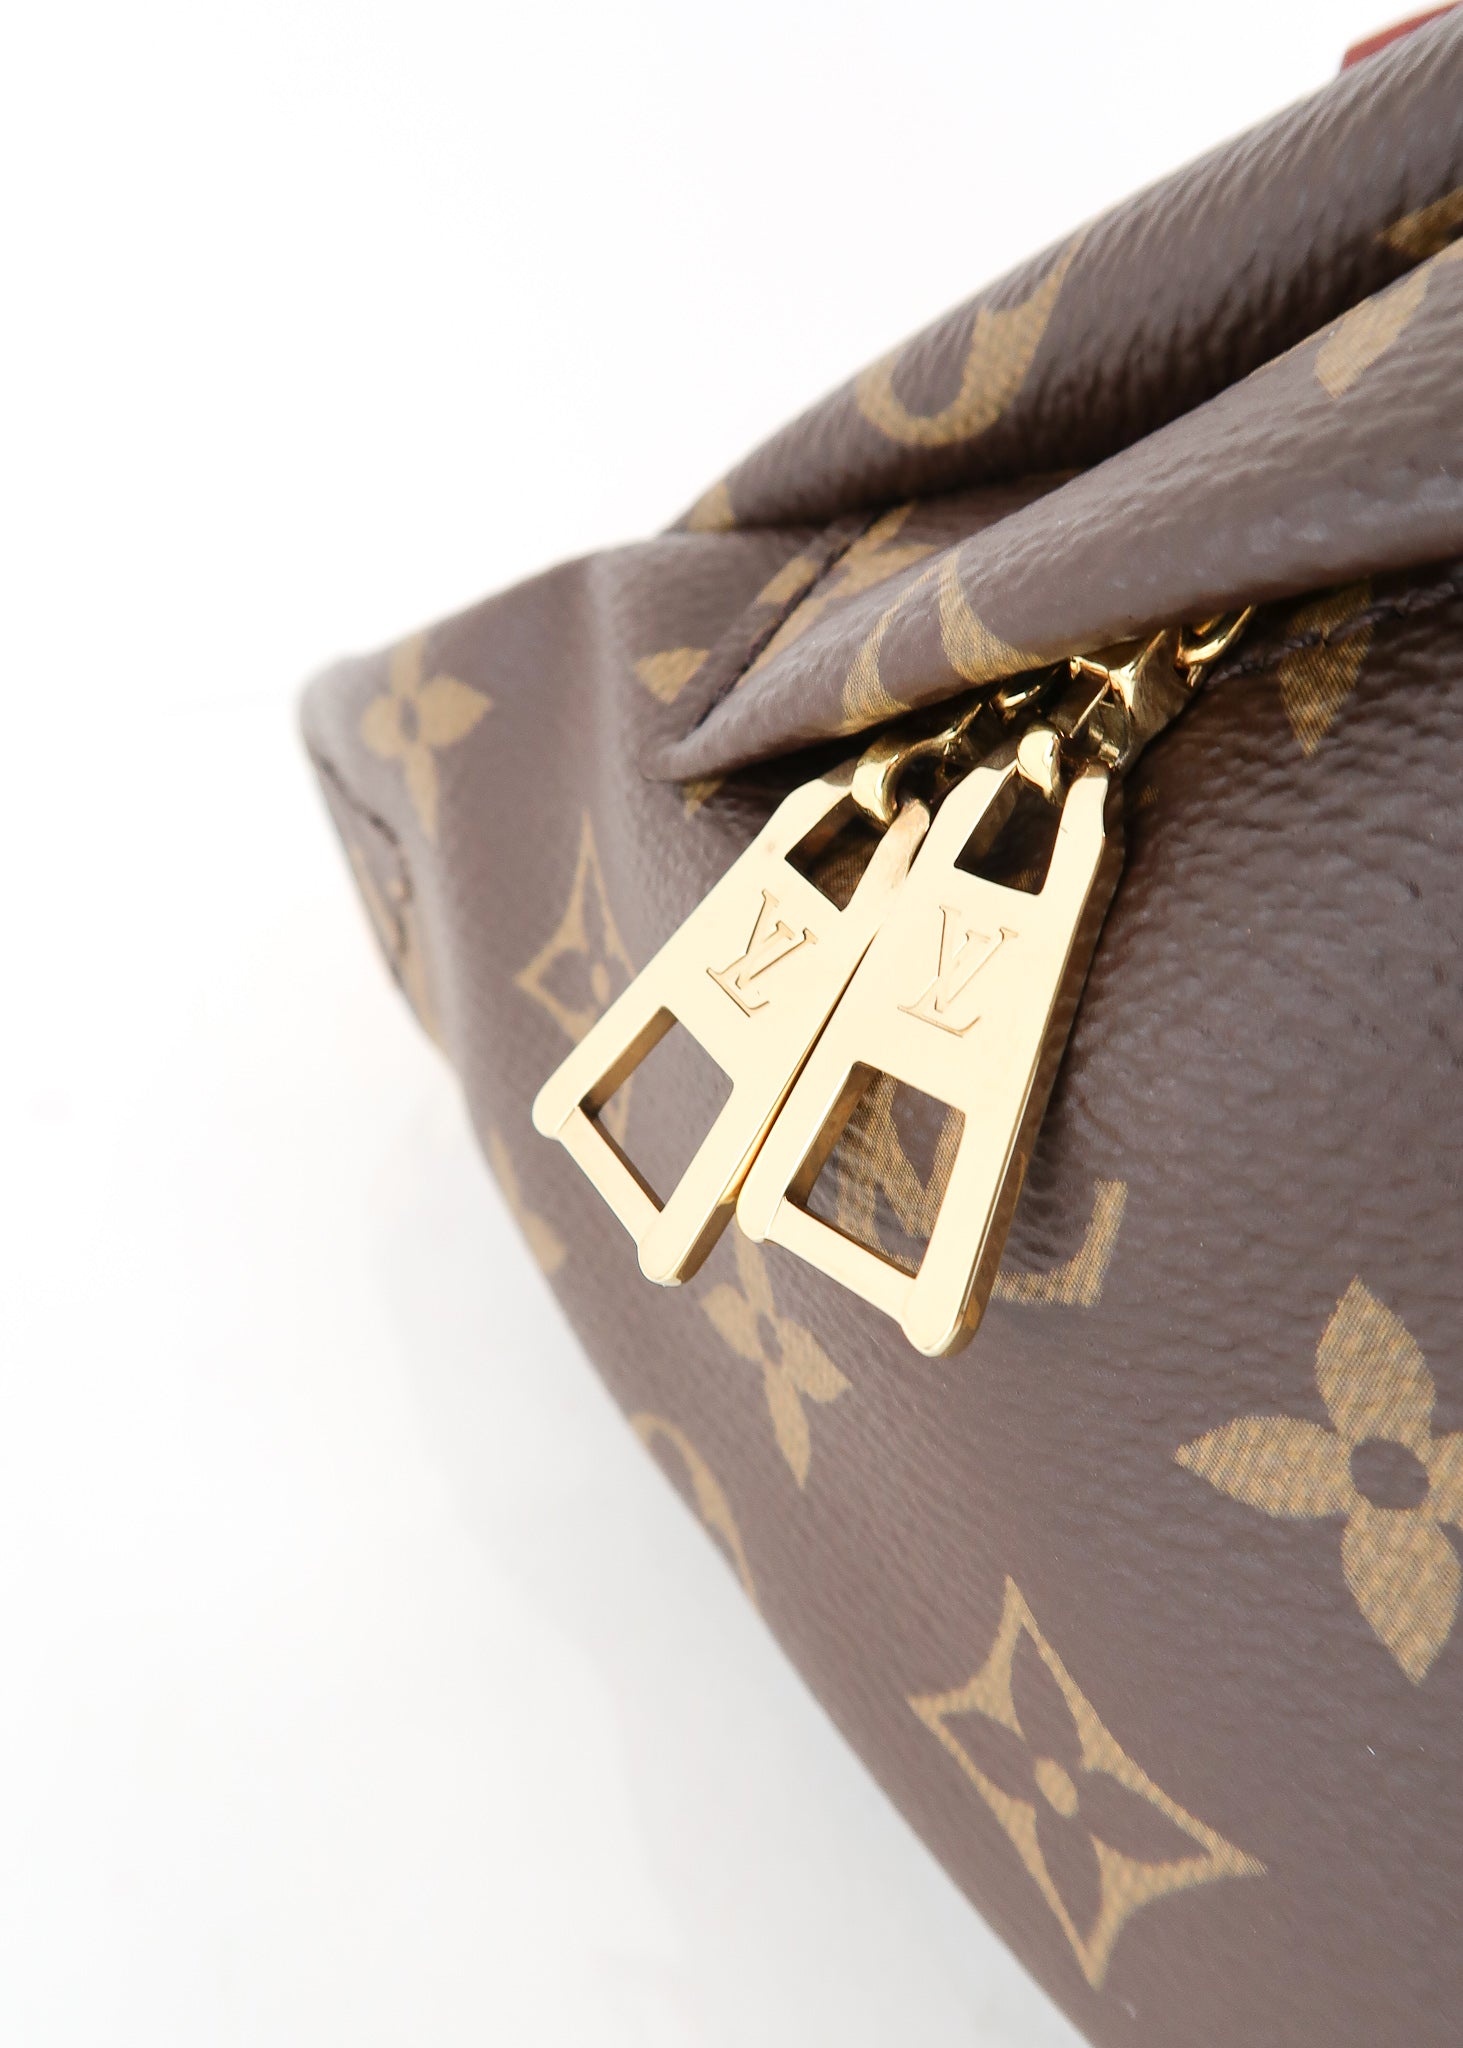 New LV mini bumbag💕 Dm to shop #louisvuitton #louisvuittonbag #louisv, Louis  Vuitton Bag